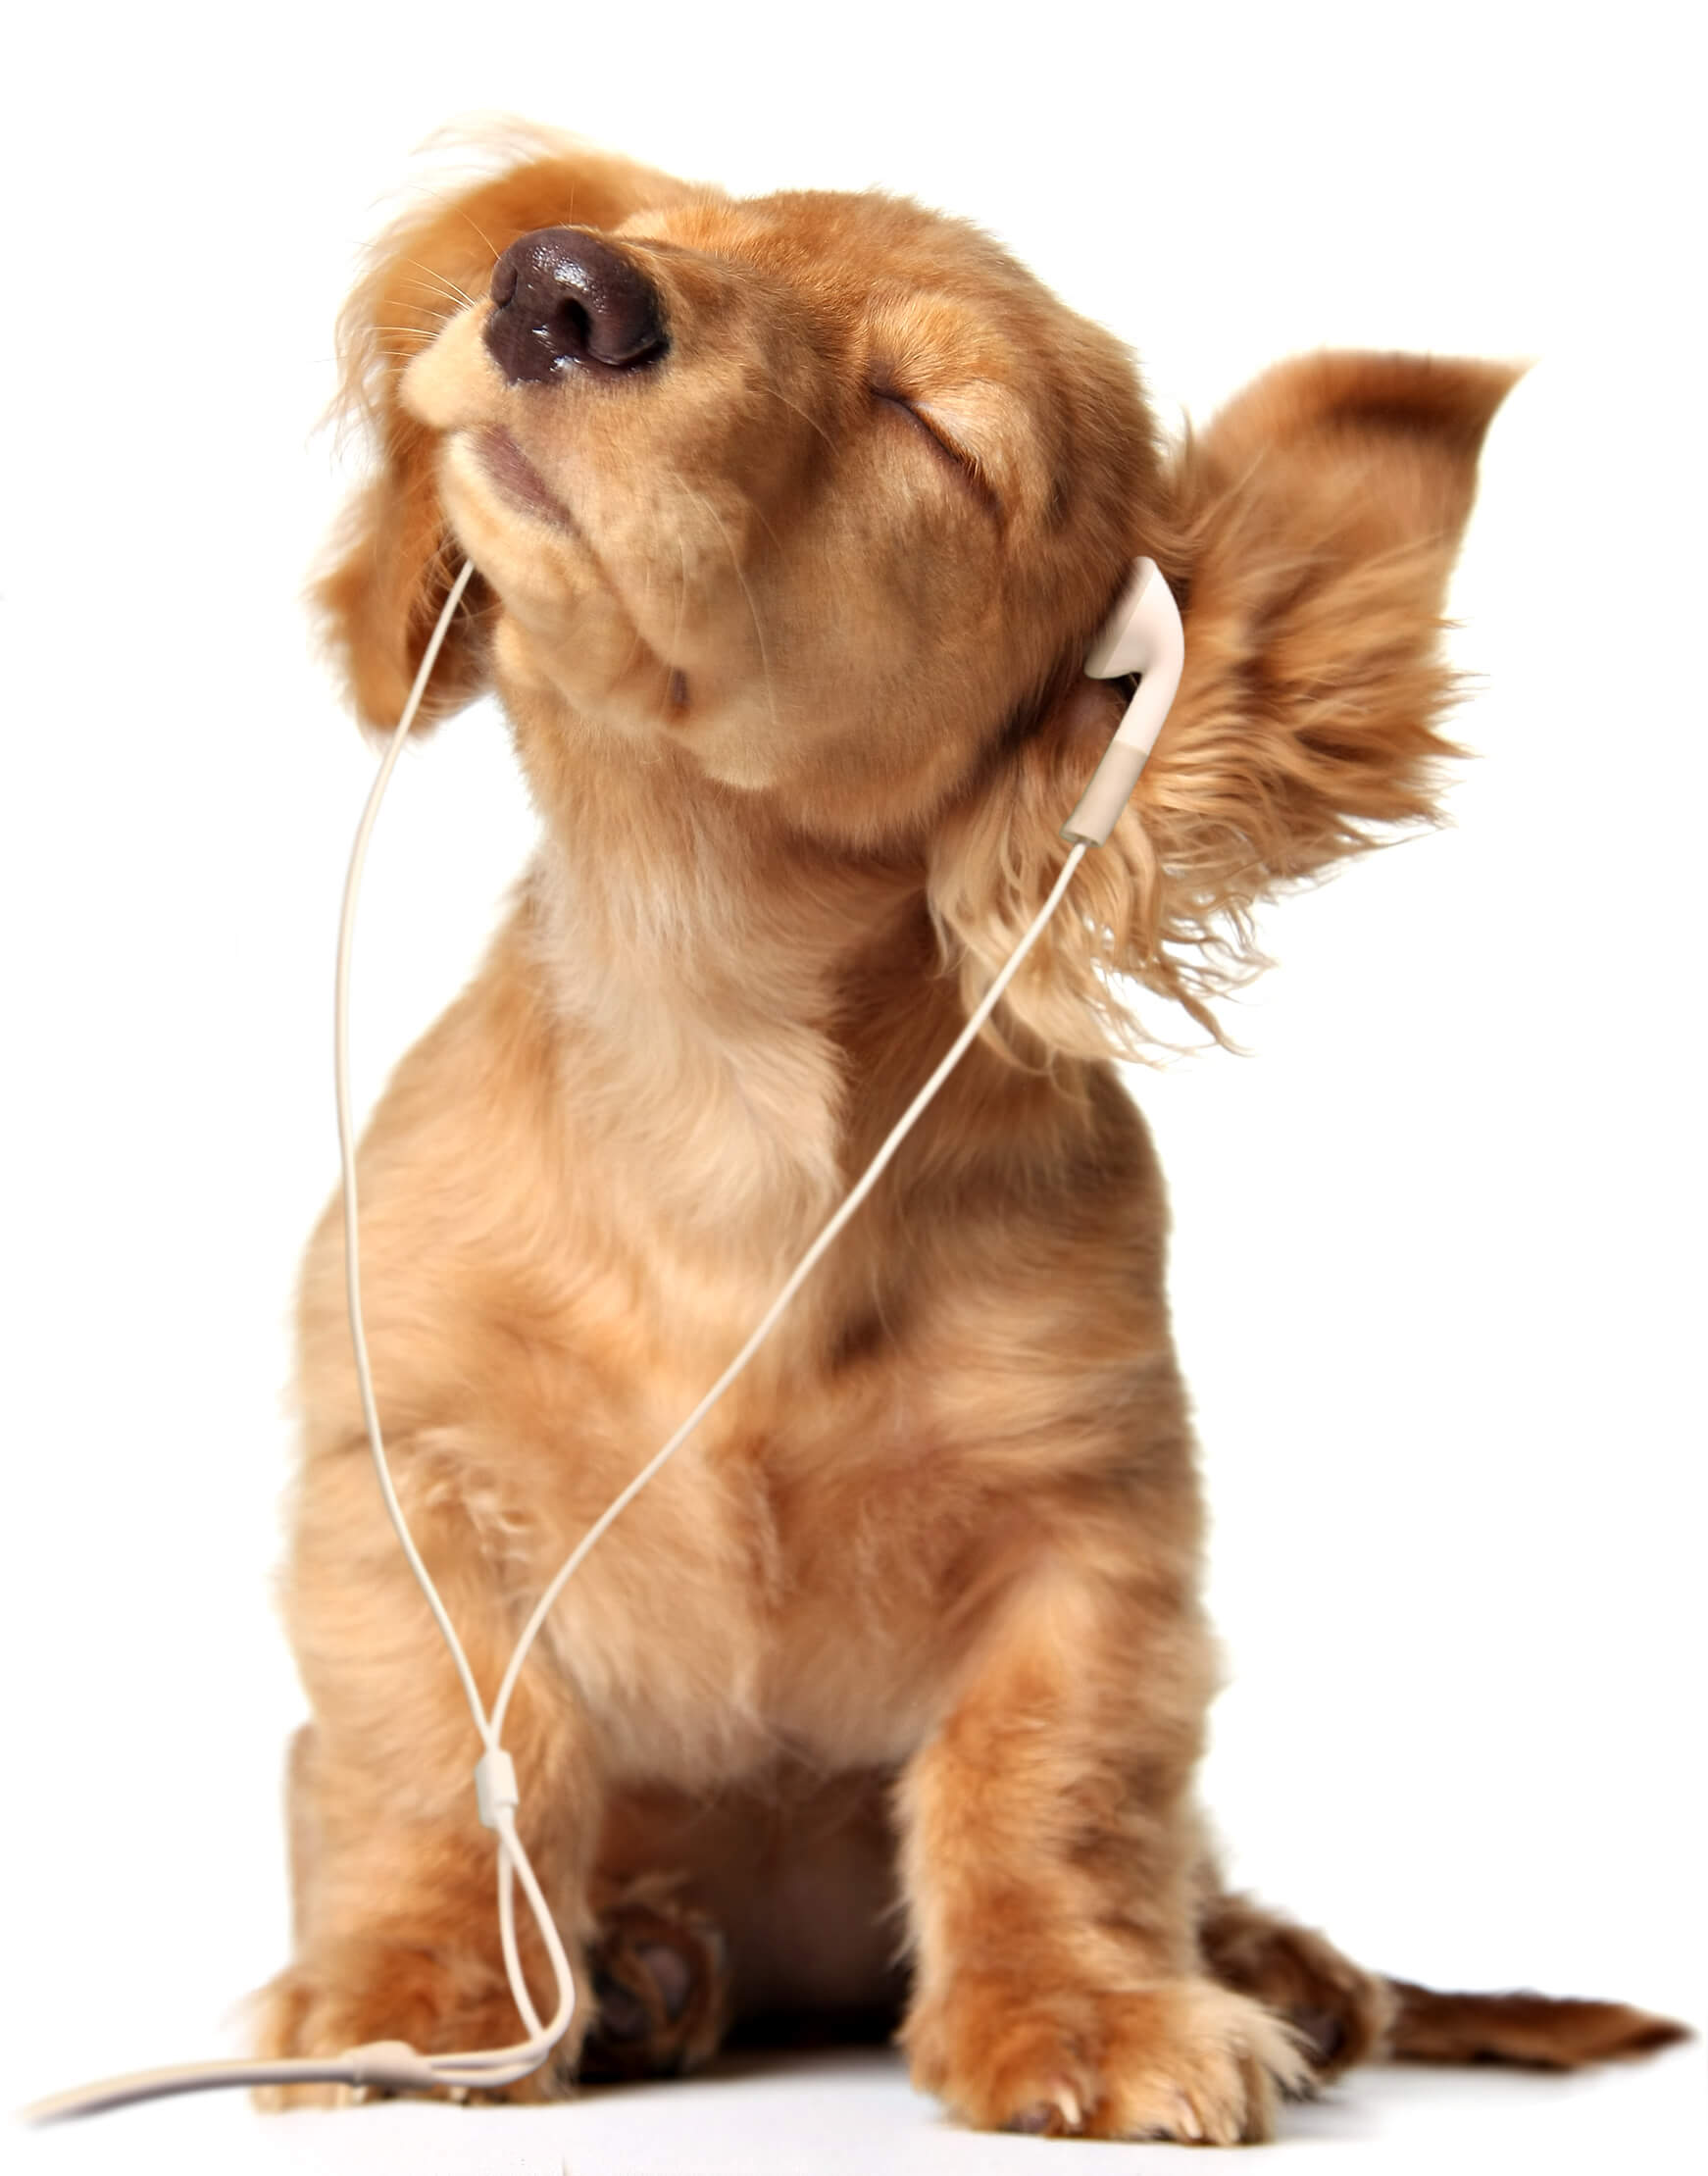 A puppy listens to music through ear buds